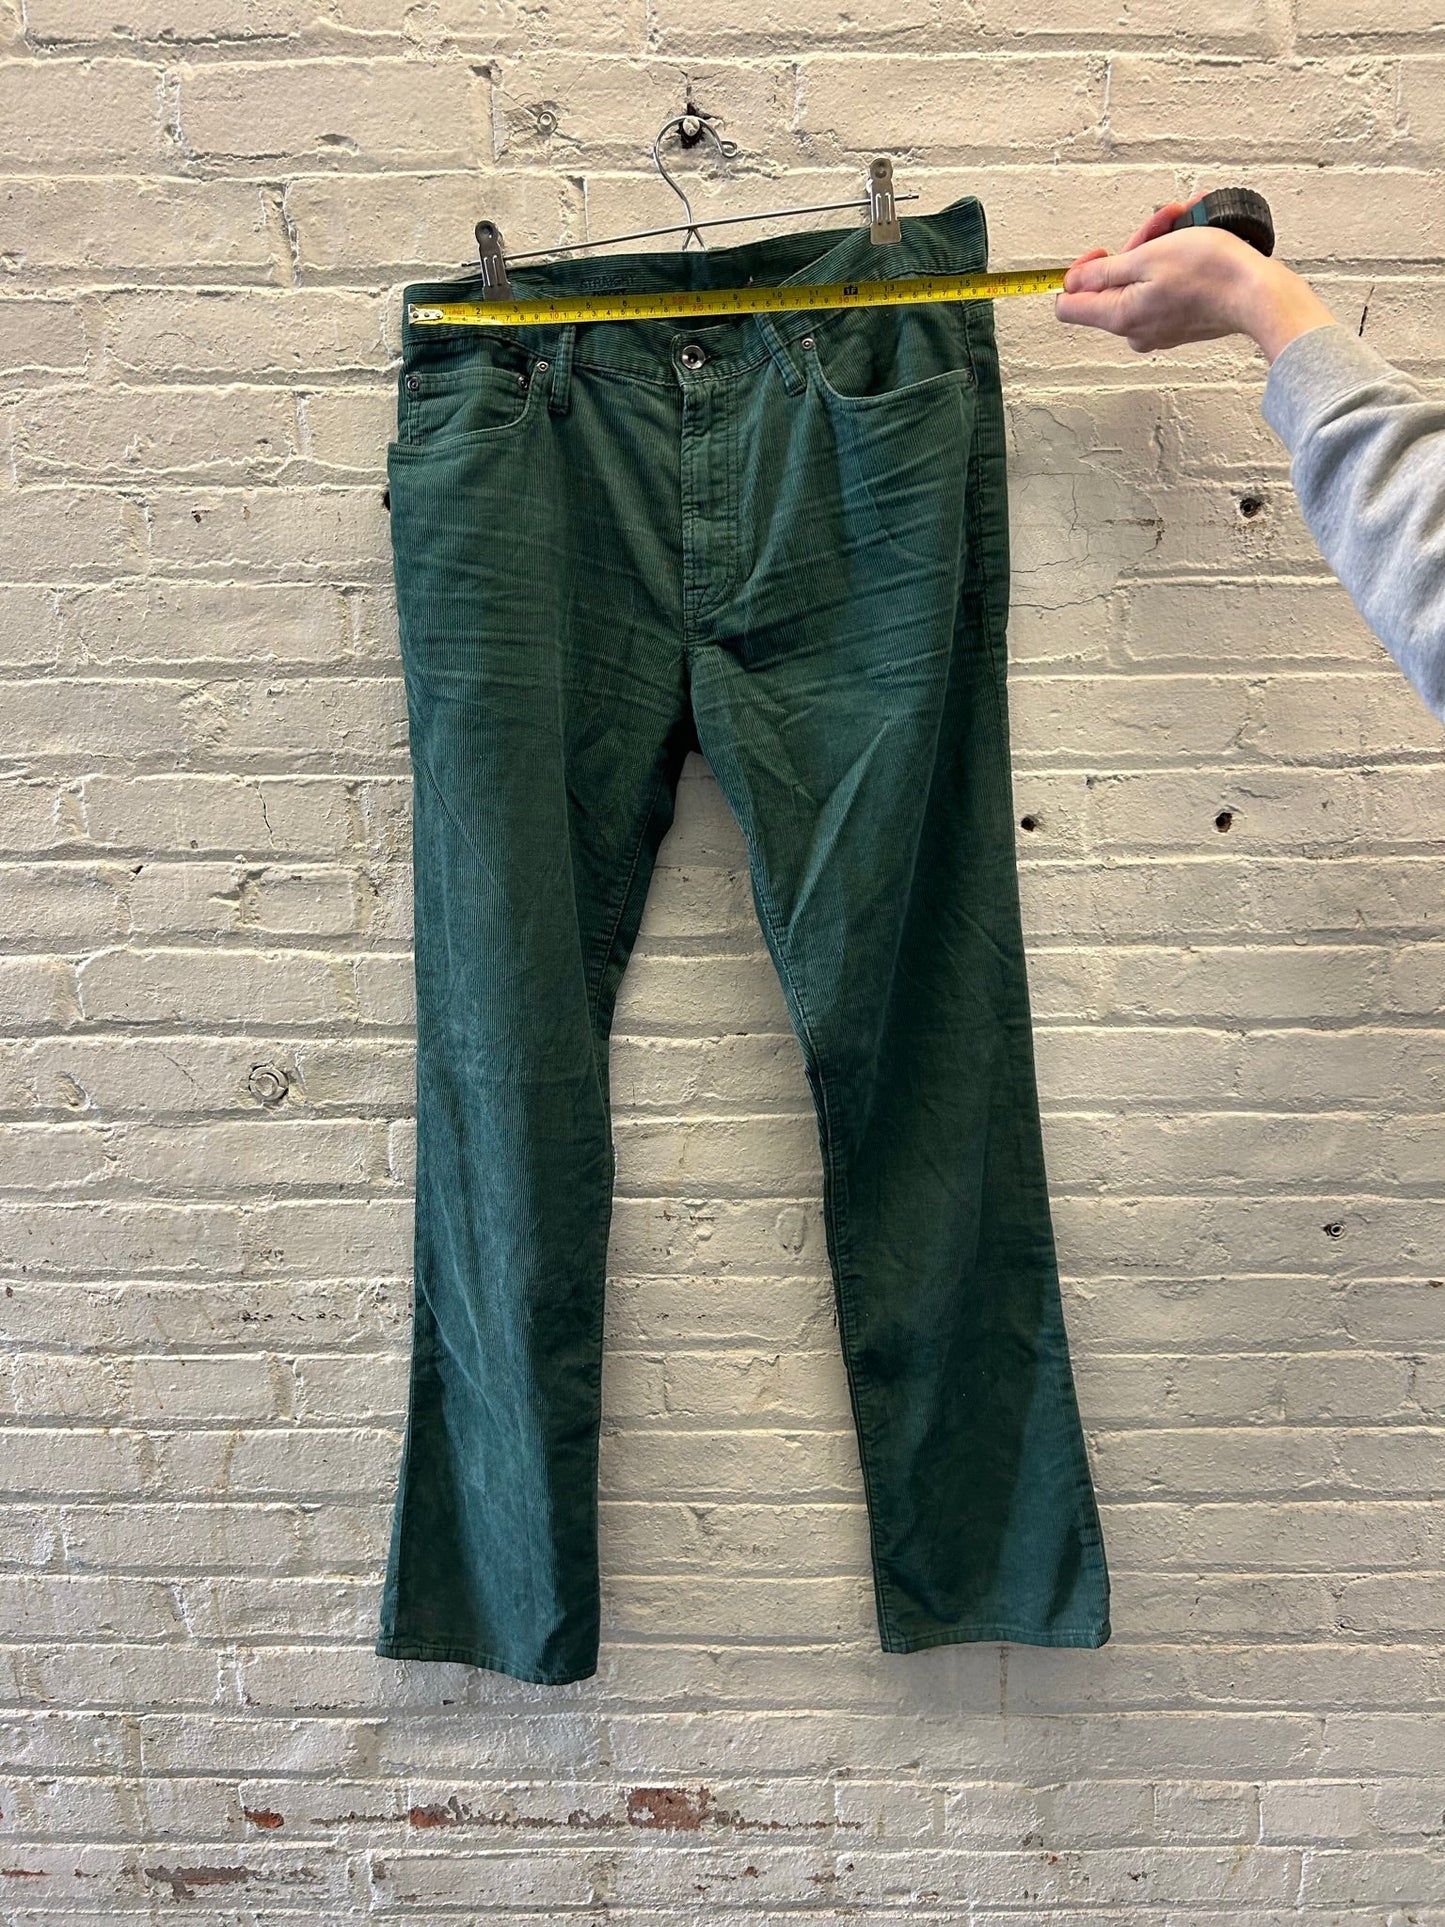 Gap Green Corduoy Pants